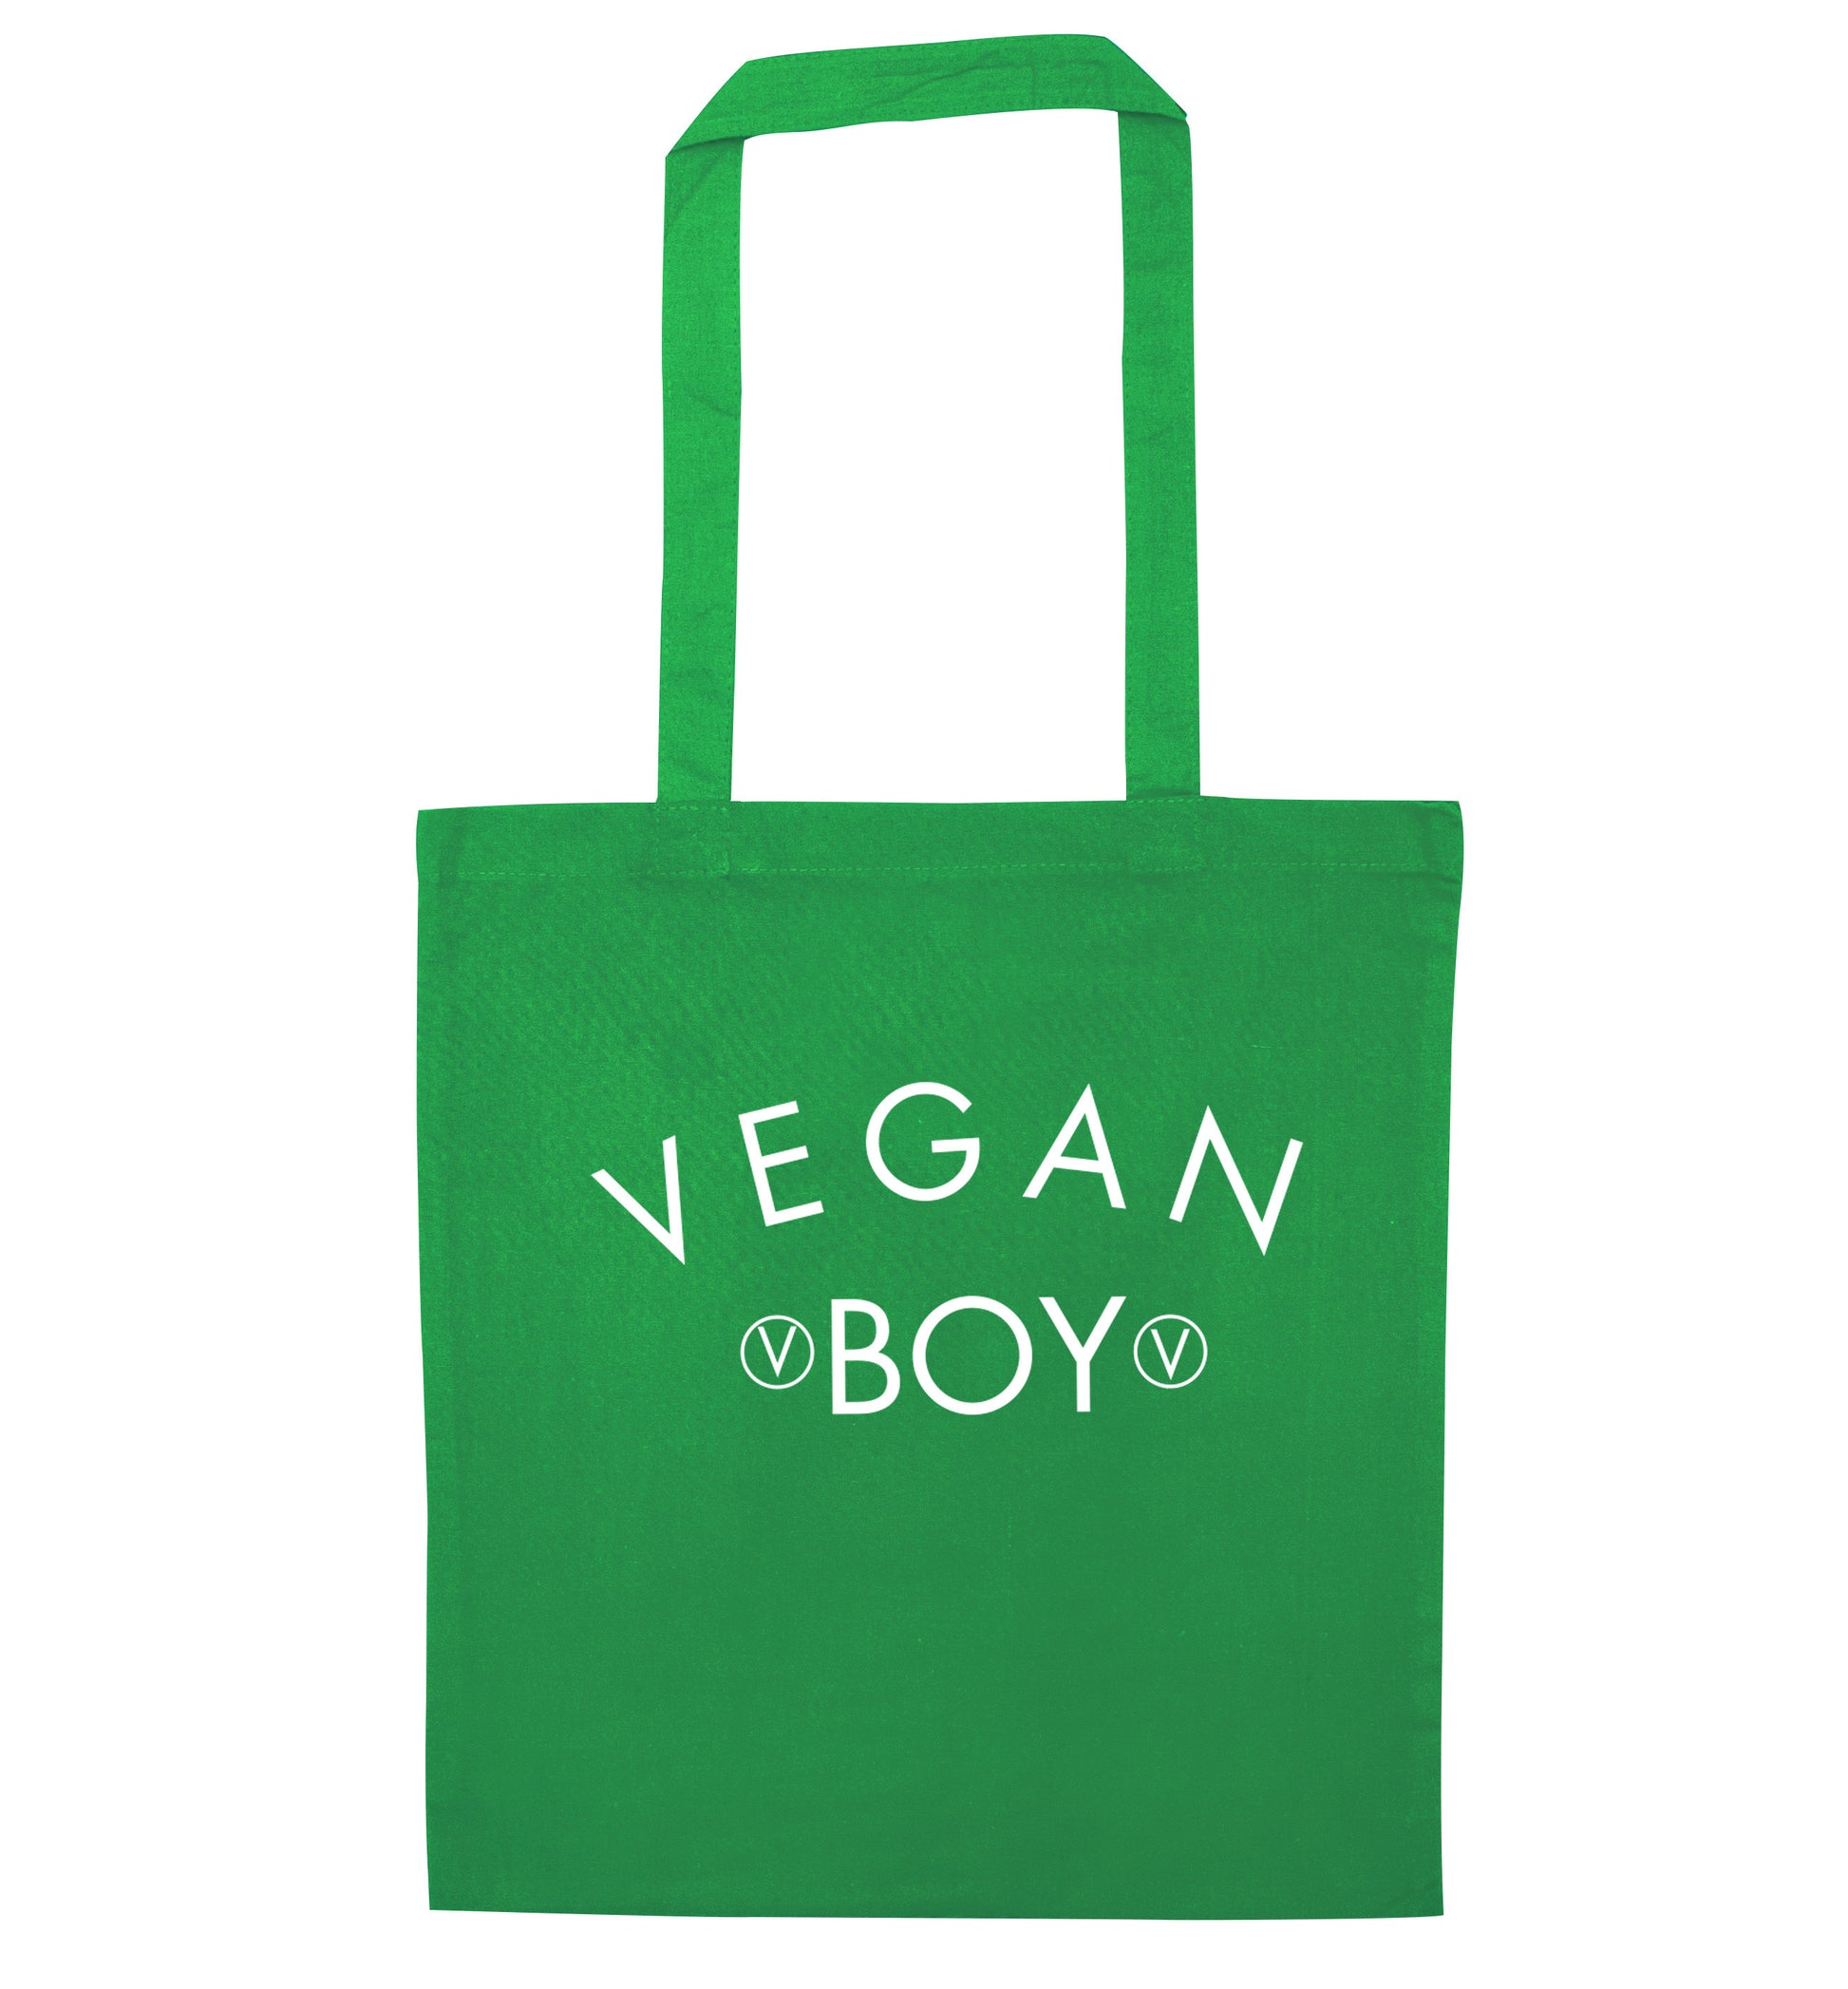 Vegan boy green tote bag